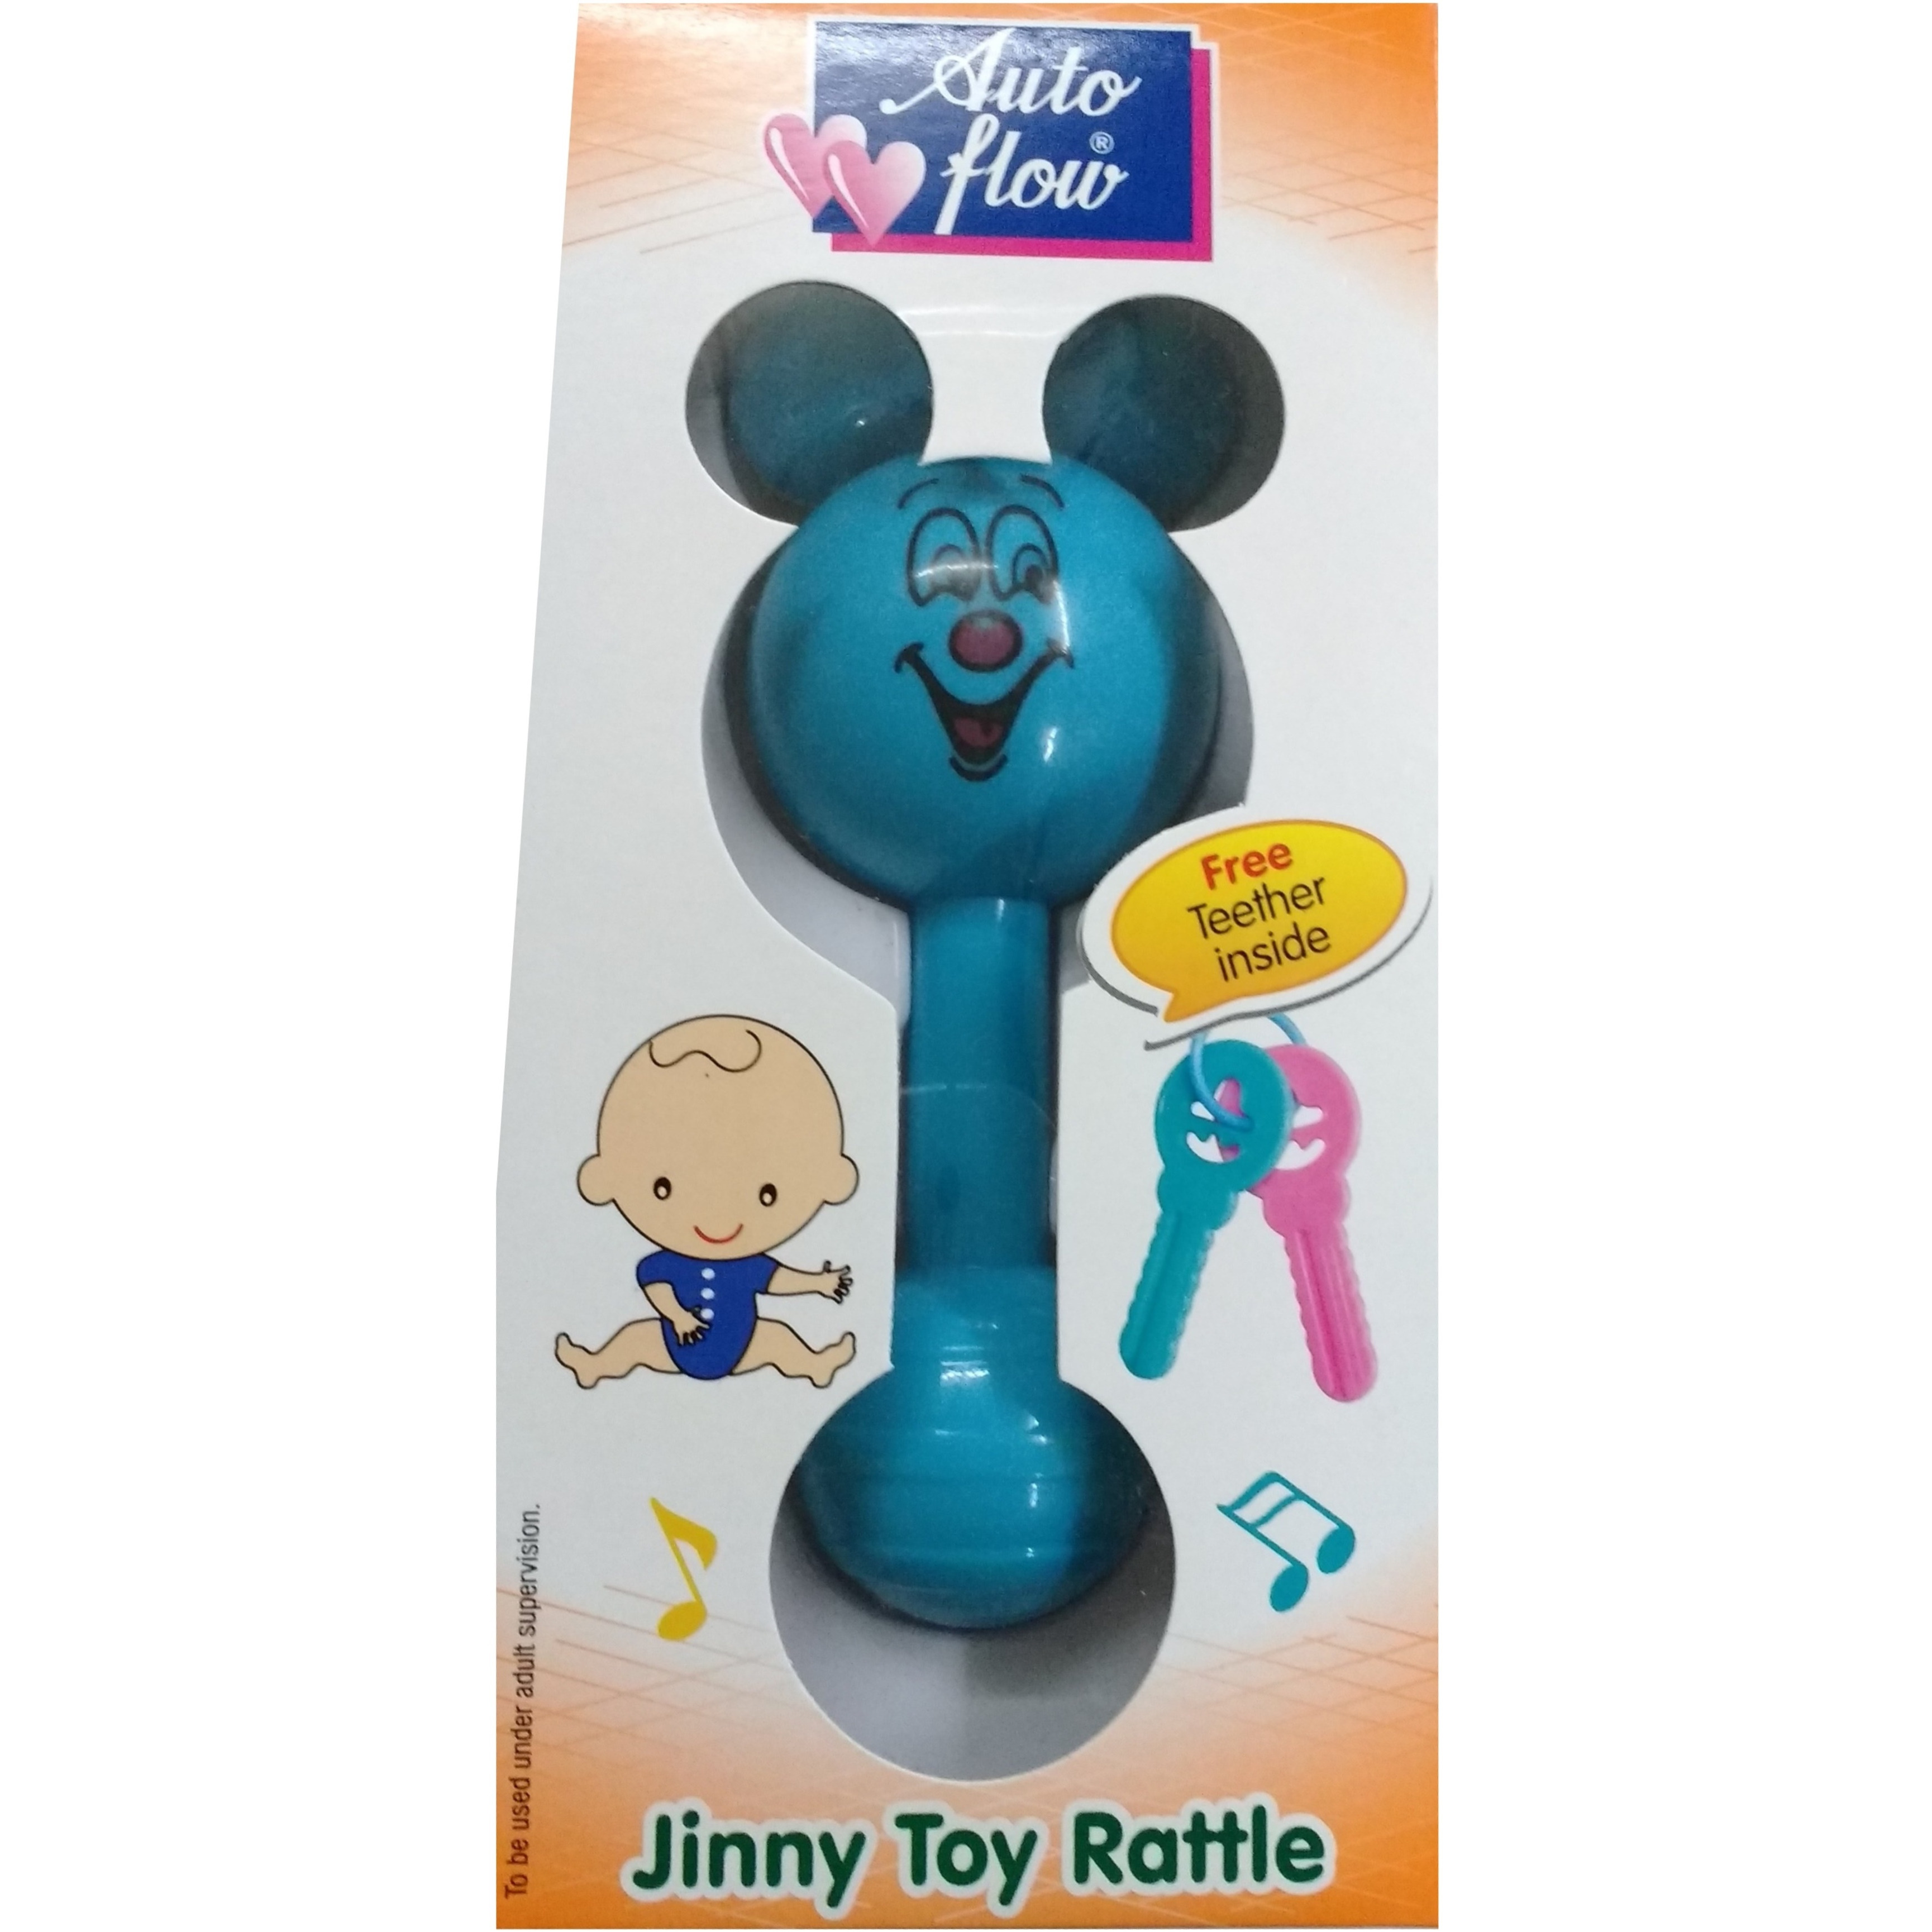 Auto Flow Rattle Toy - Jinny Toy - BT27 Blue